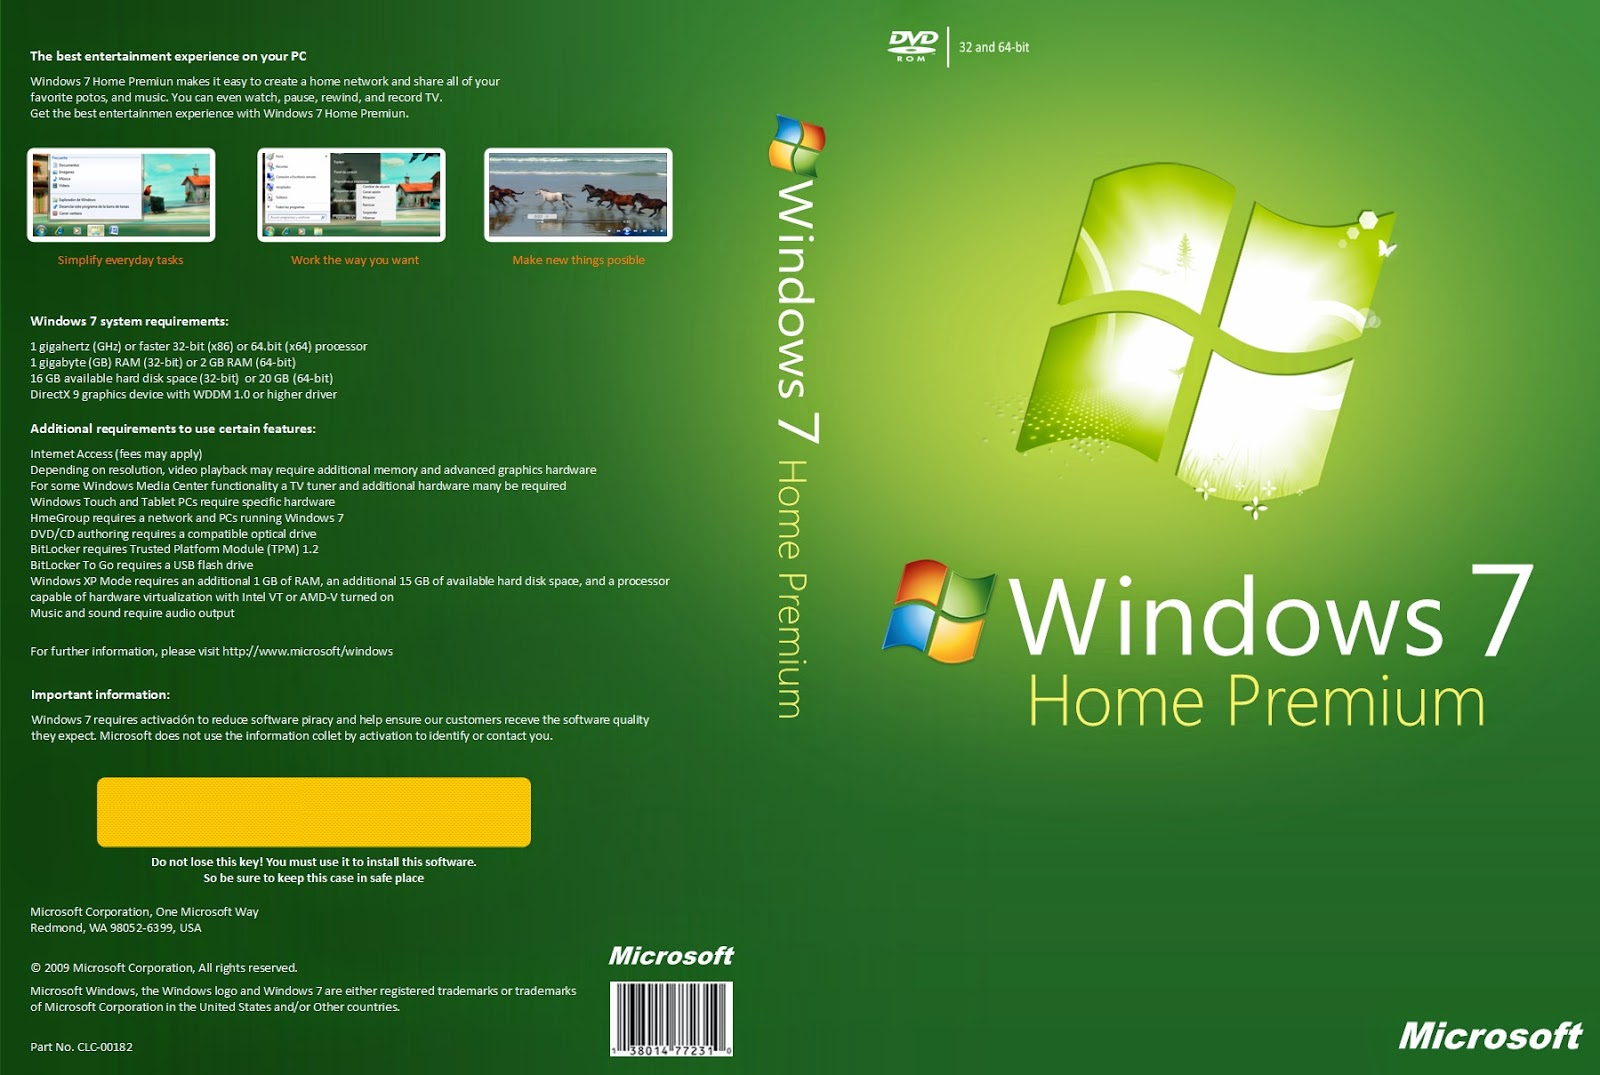 windows 7 home premium service pack 2 free download